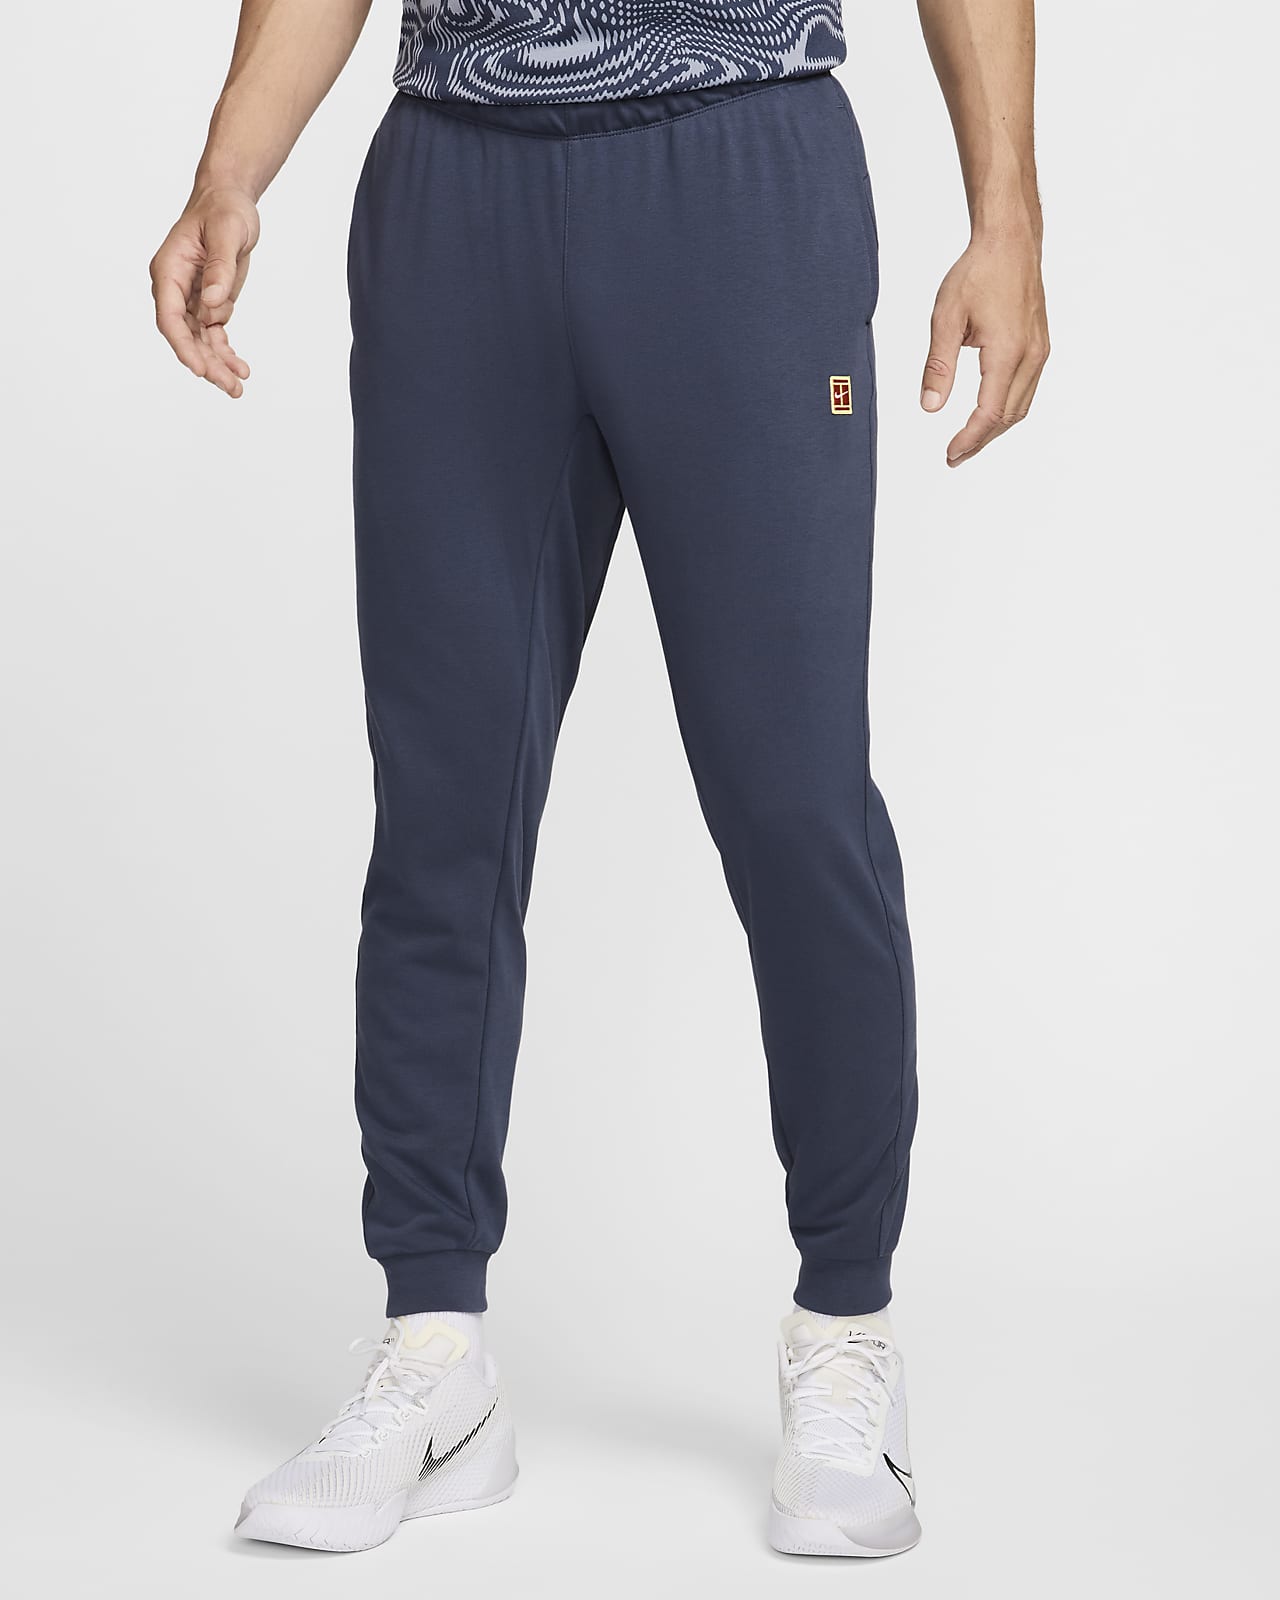 NikeCourt Heritage Pantalons de teixit French Terry de tennis - Home